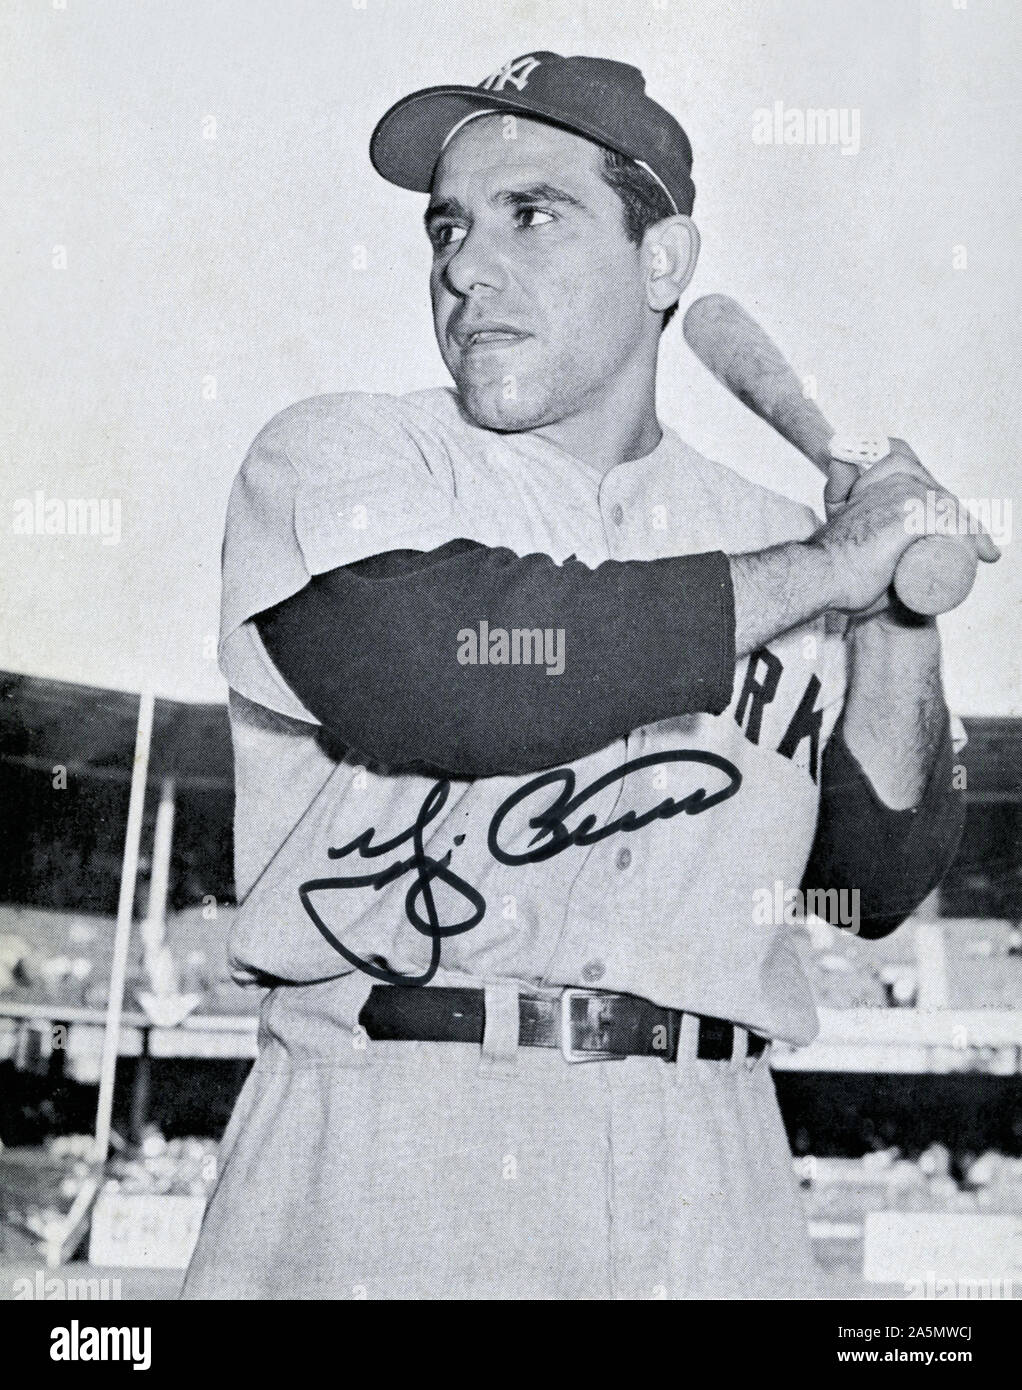 Yogi berra baseball hi-res stock photography and images - Alamy